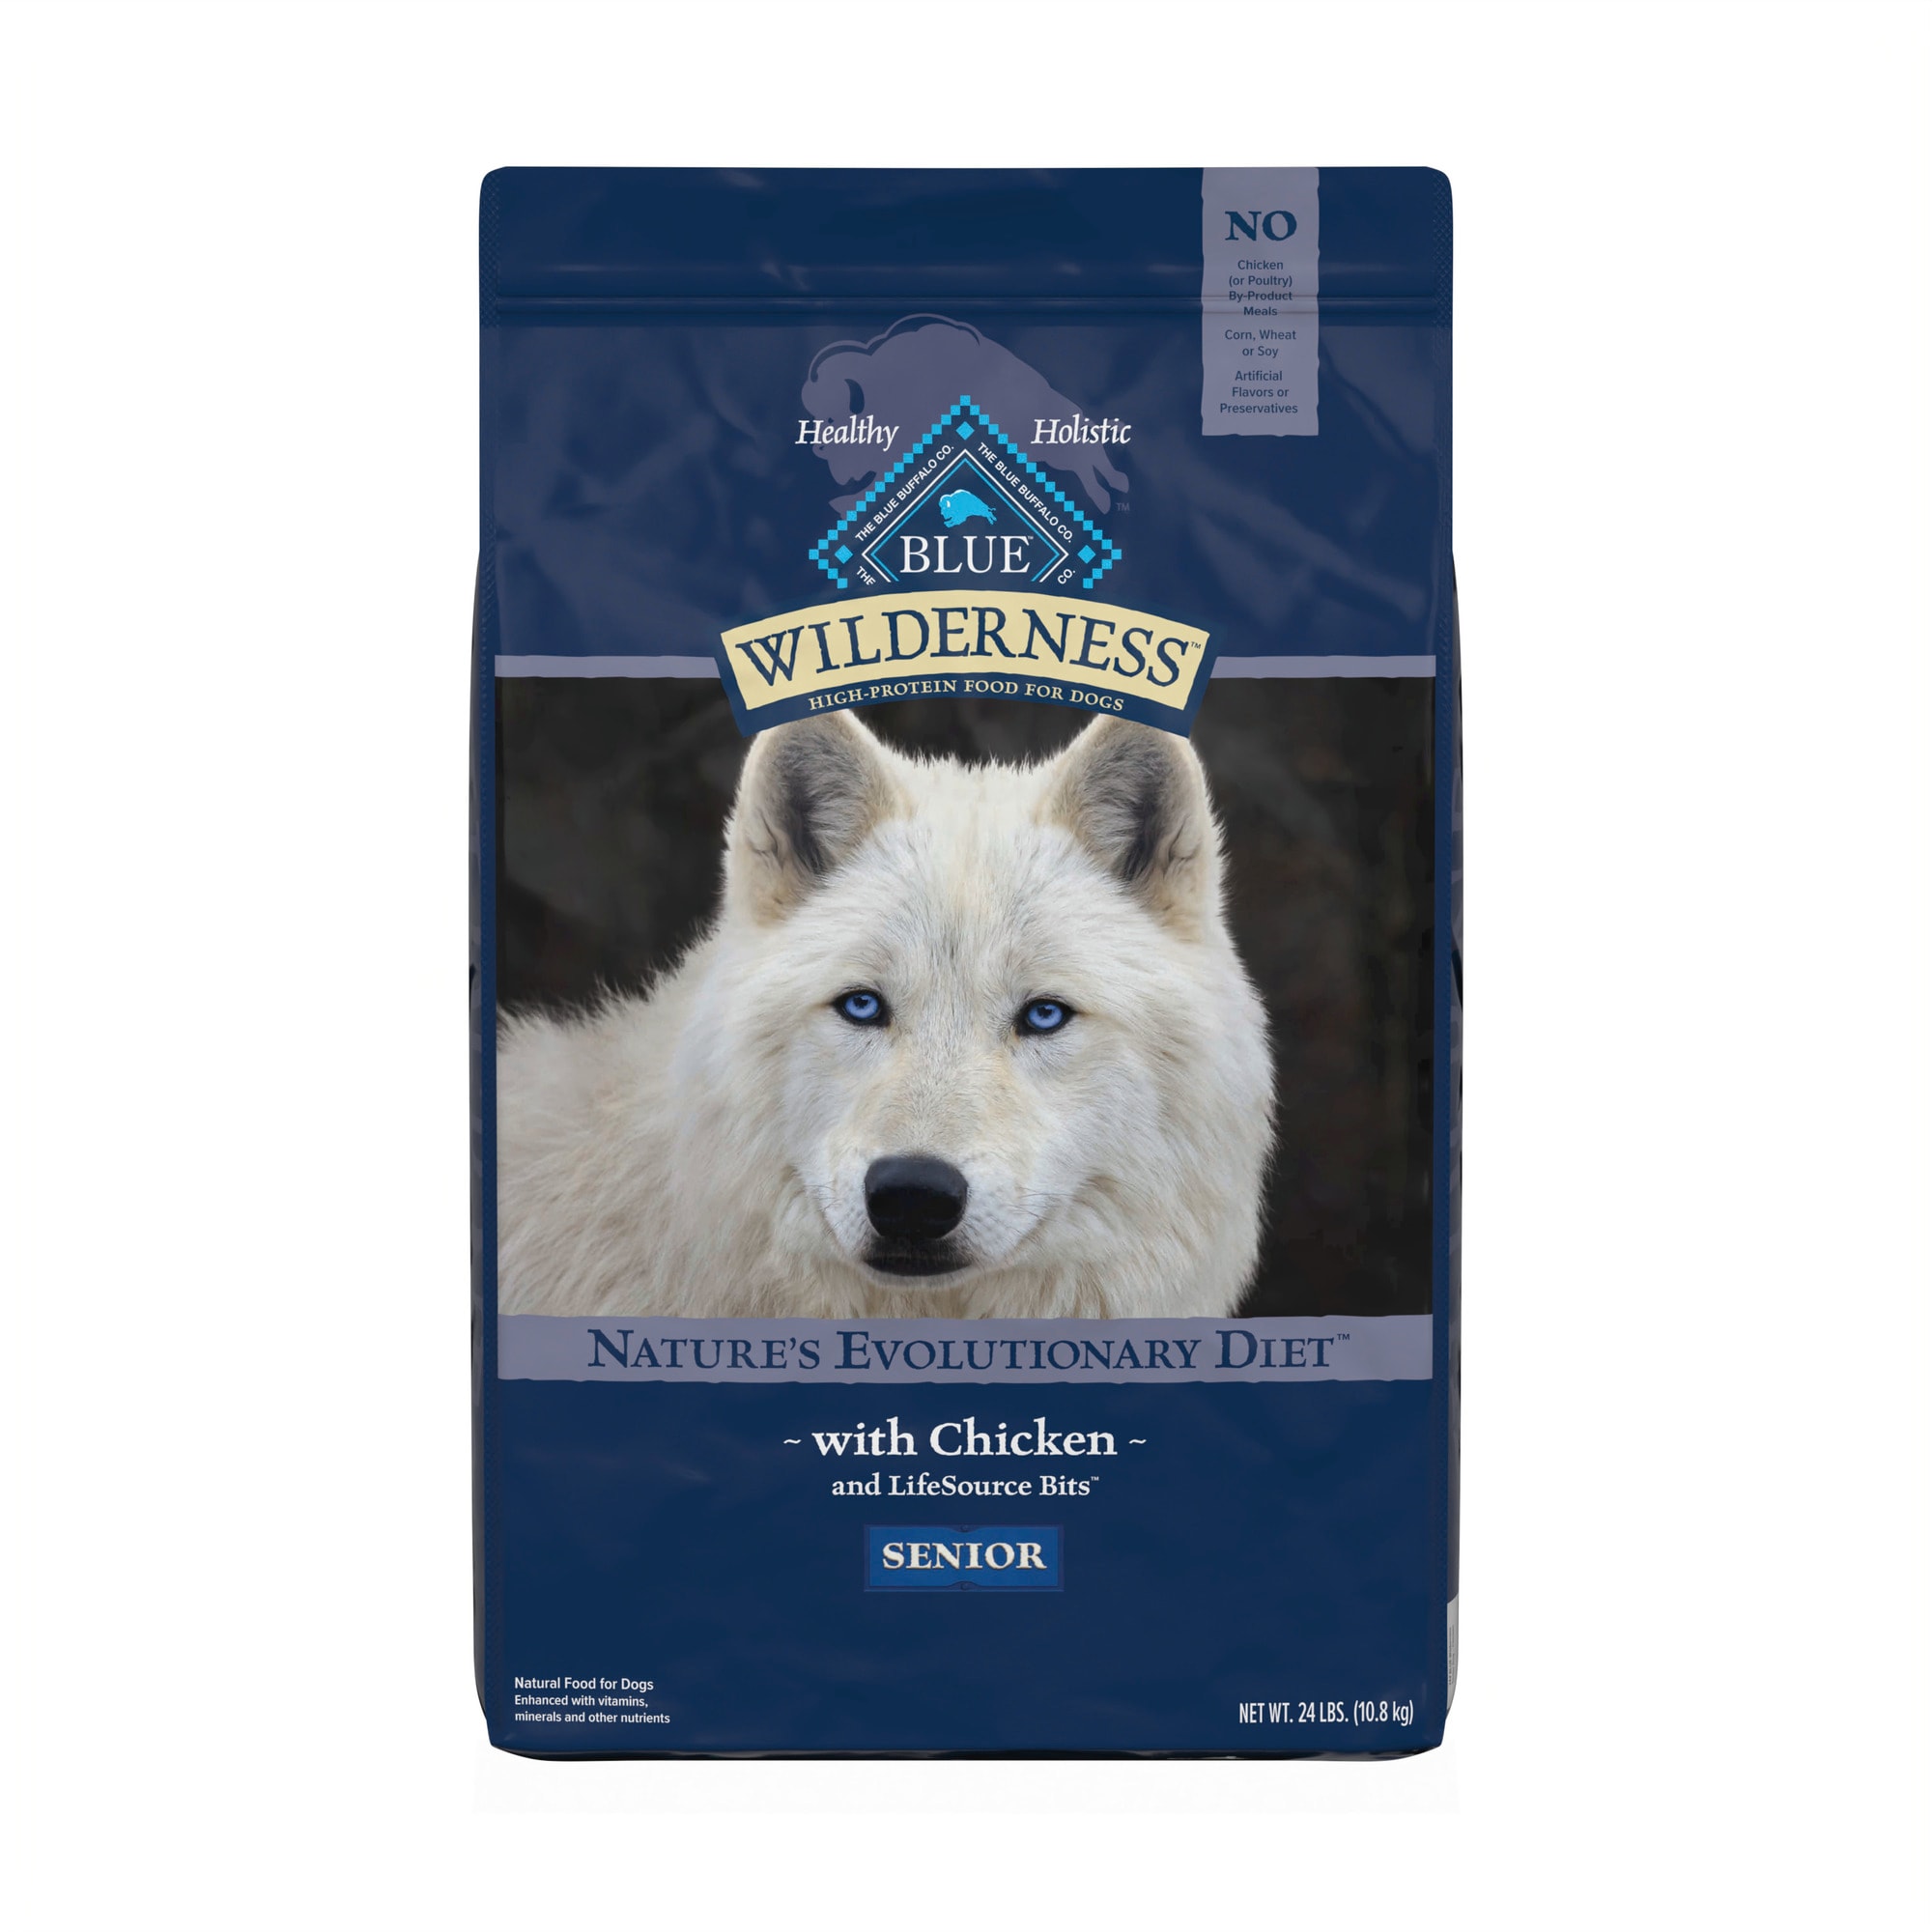 petco blue dog food